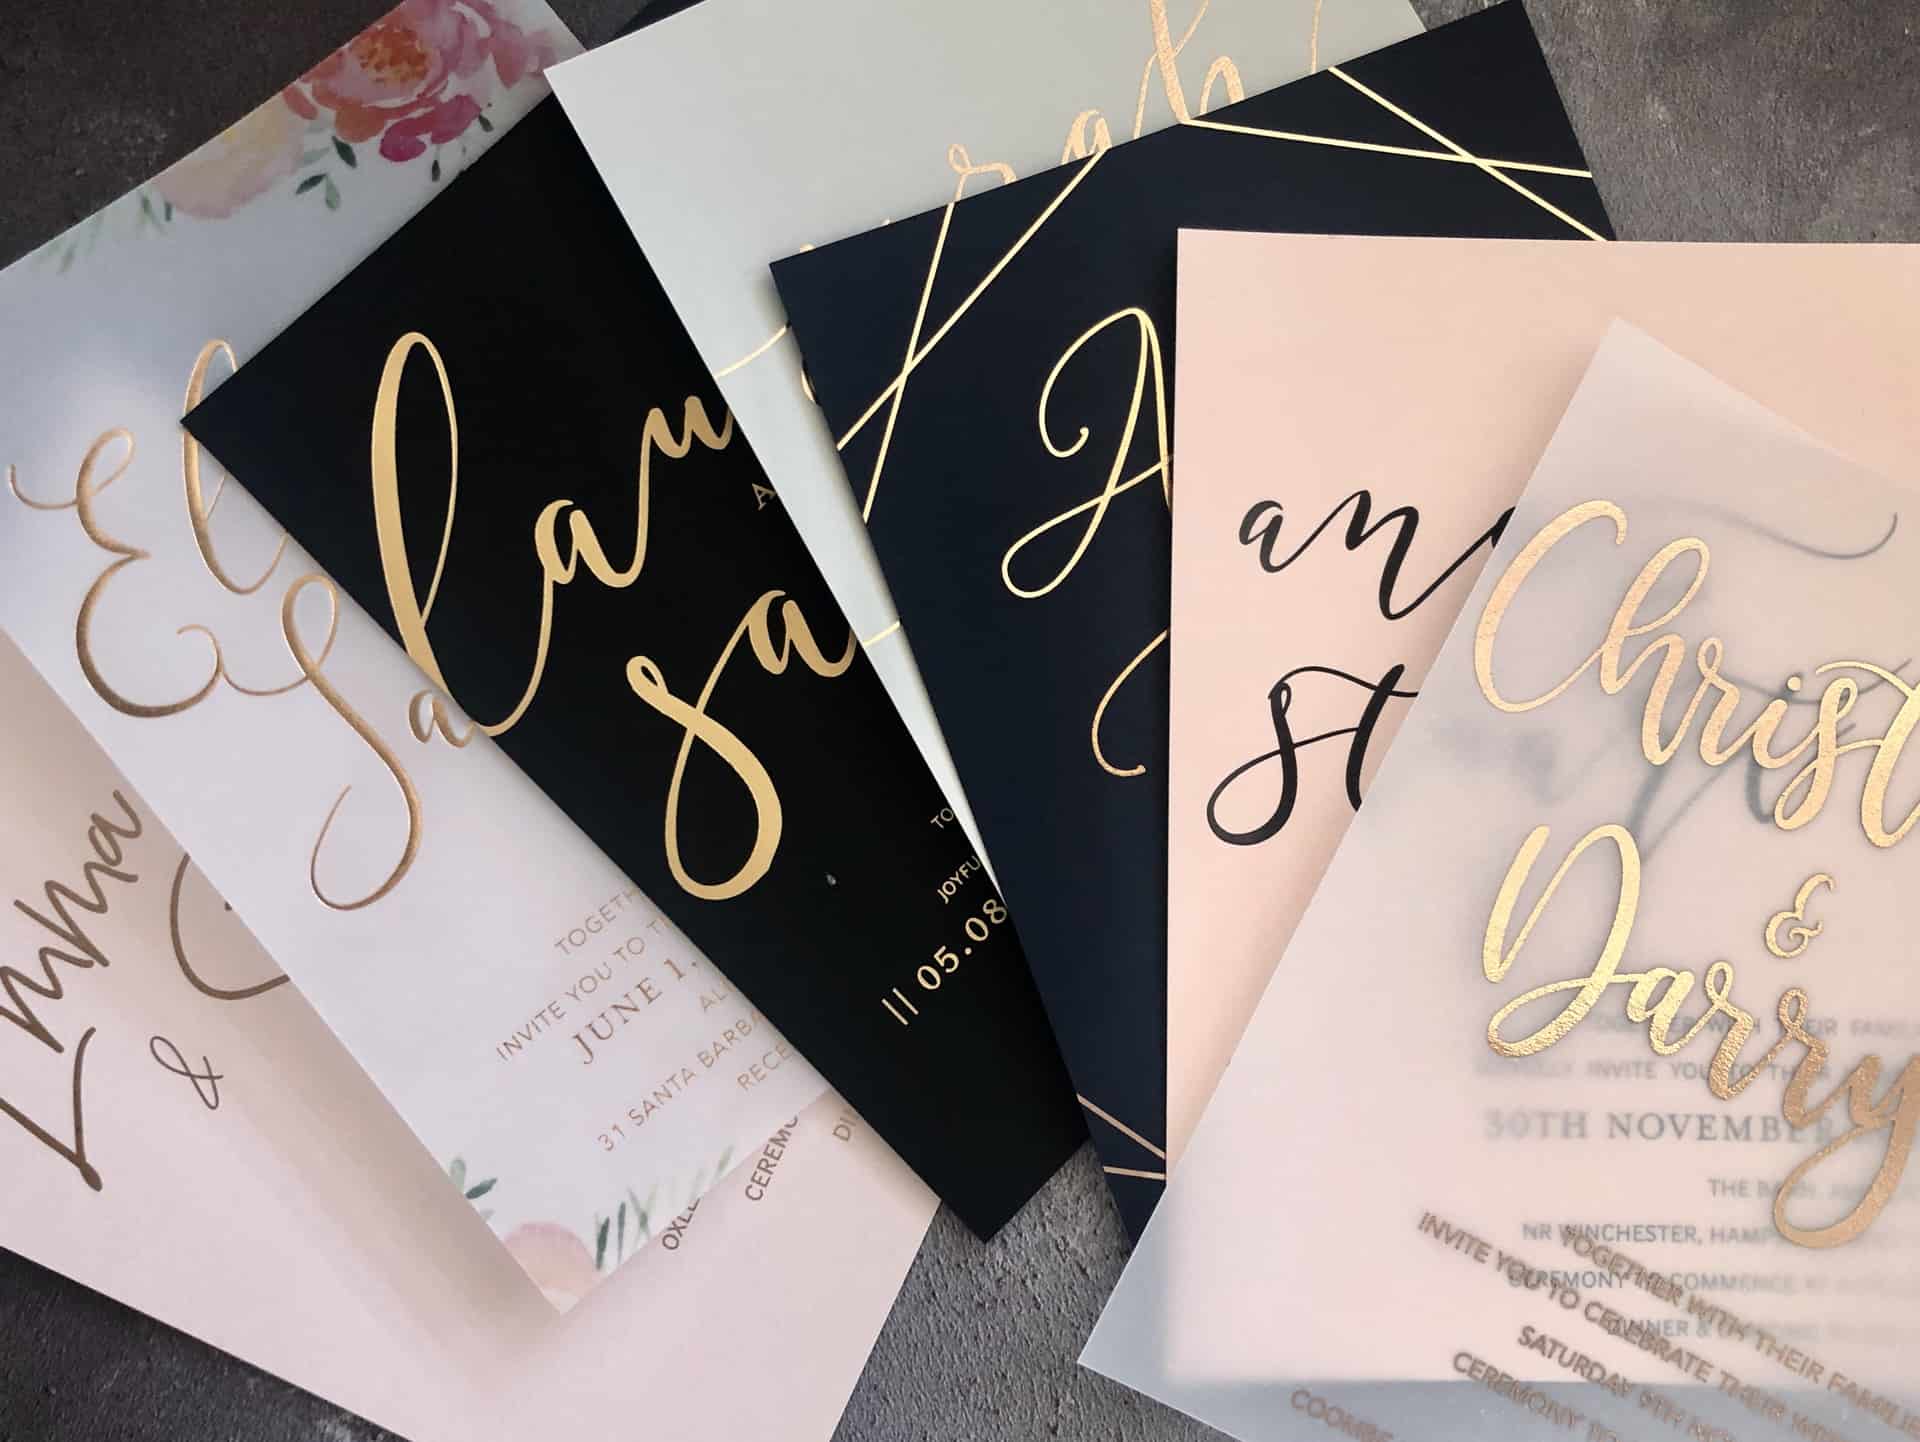 wedding invitation samples